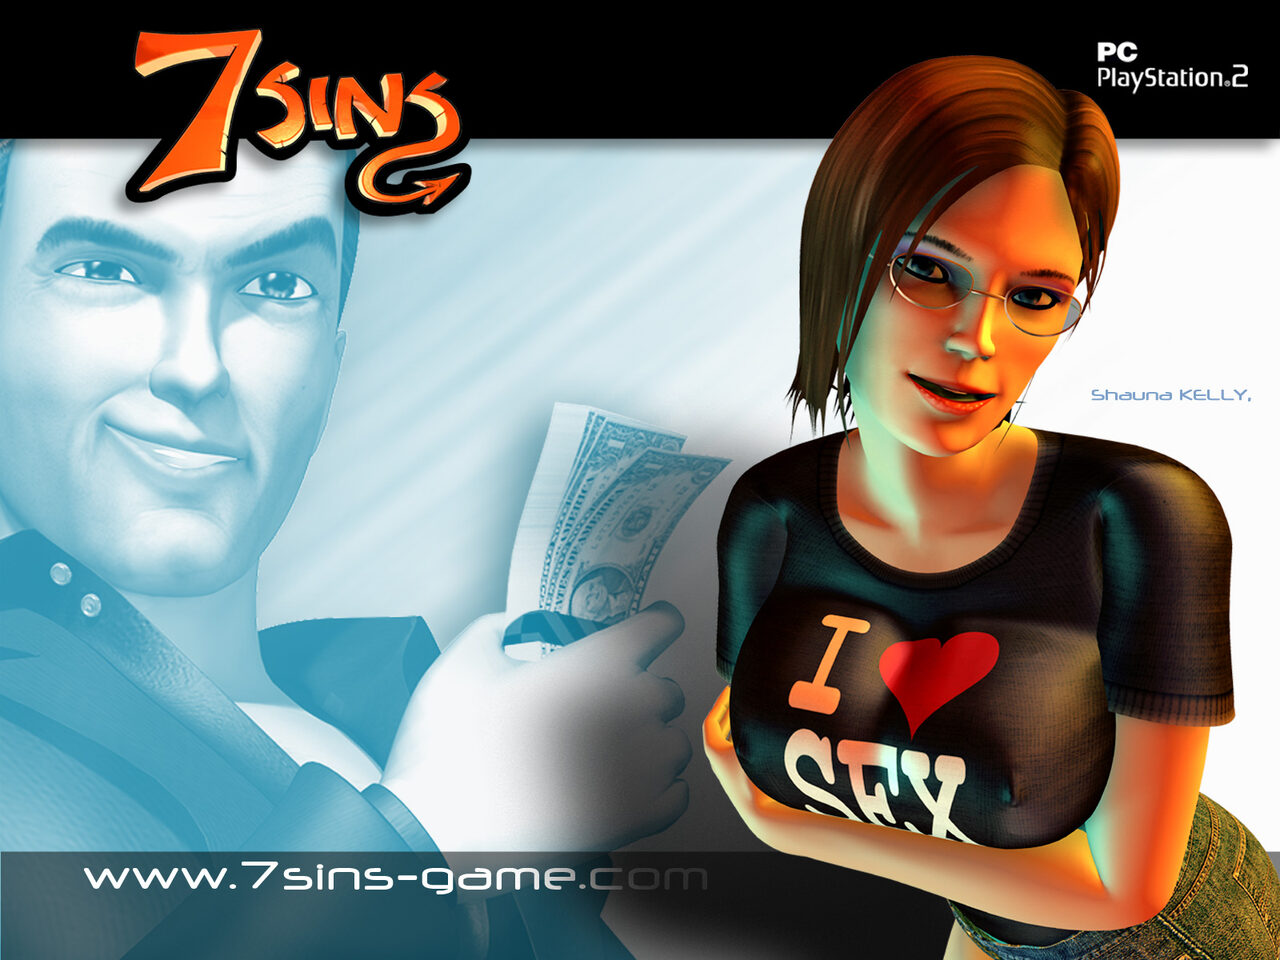 7 sins game uncensored